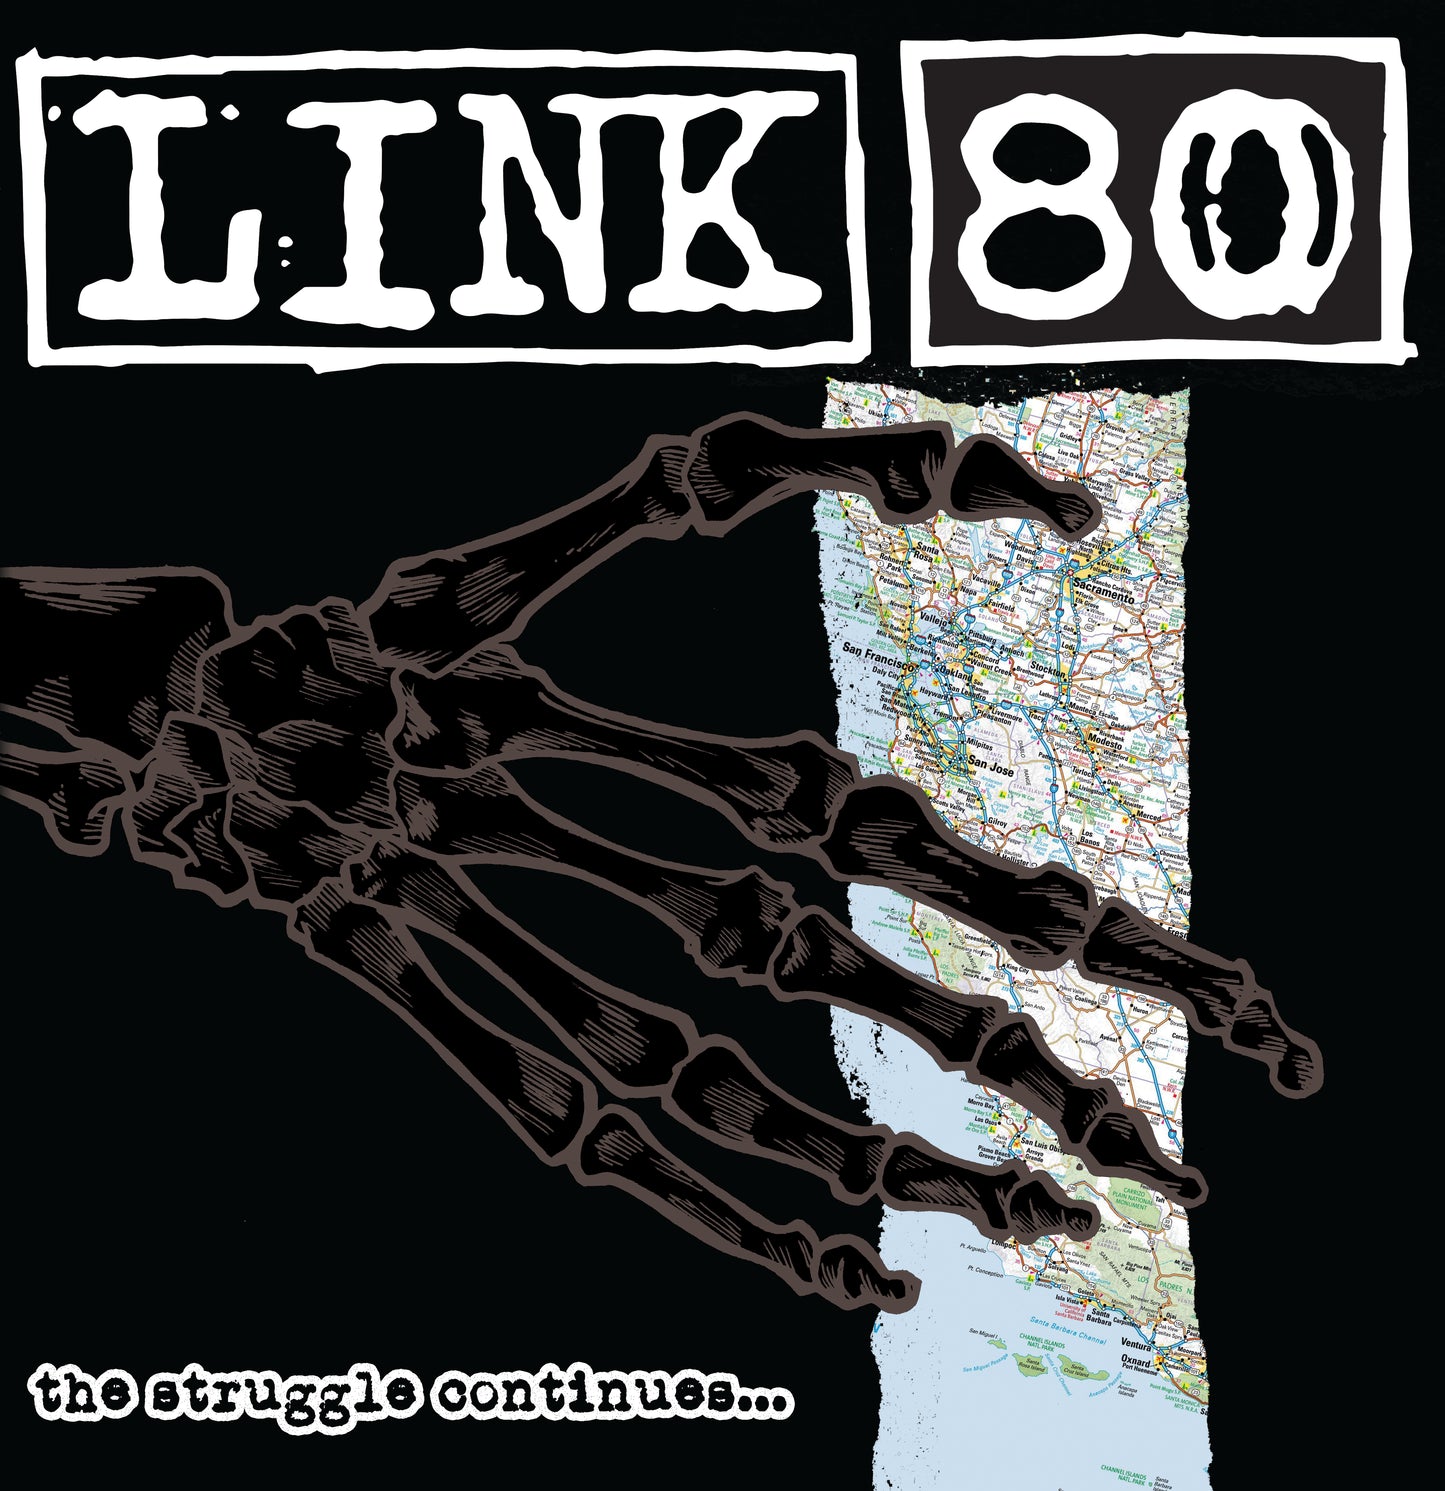 LINK 80 "Struggle Continues" LP